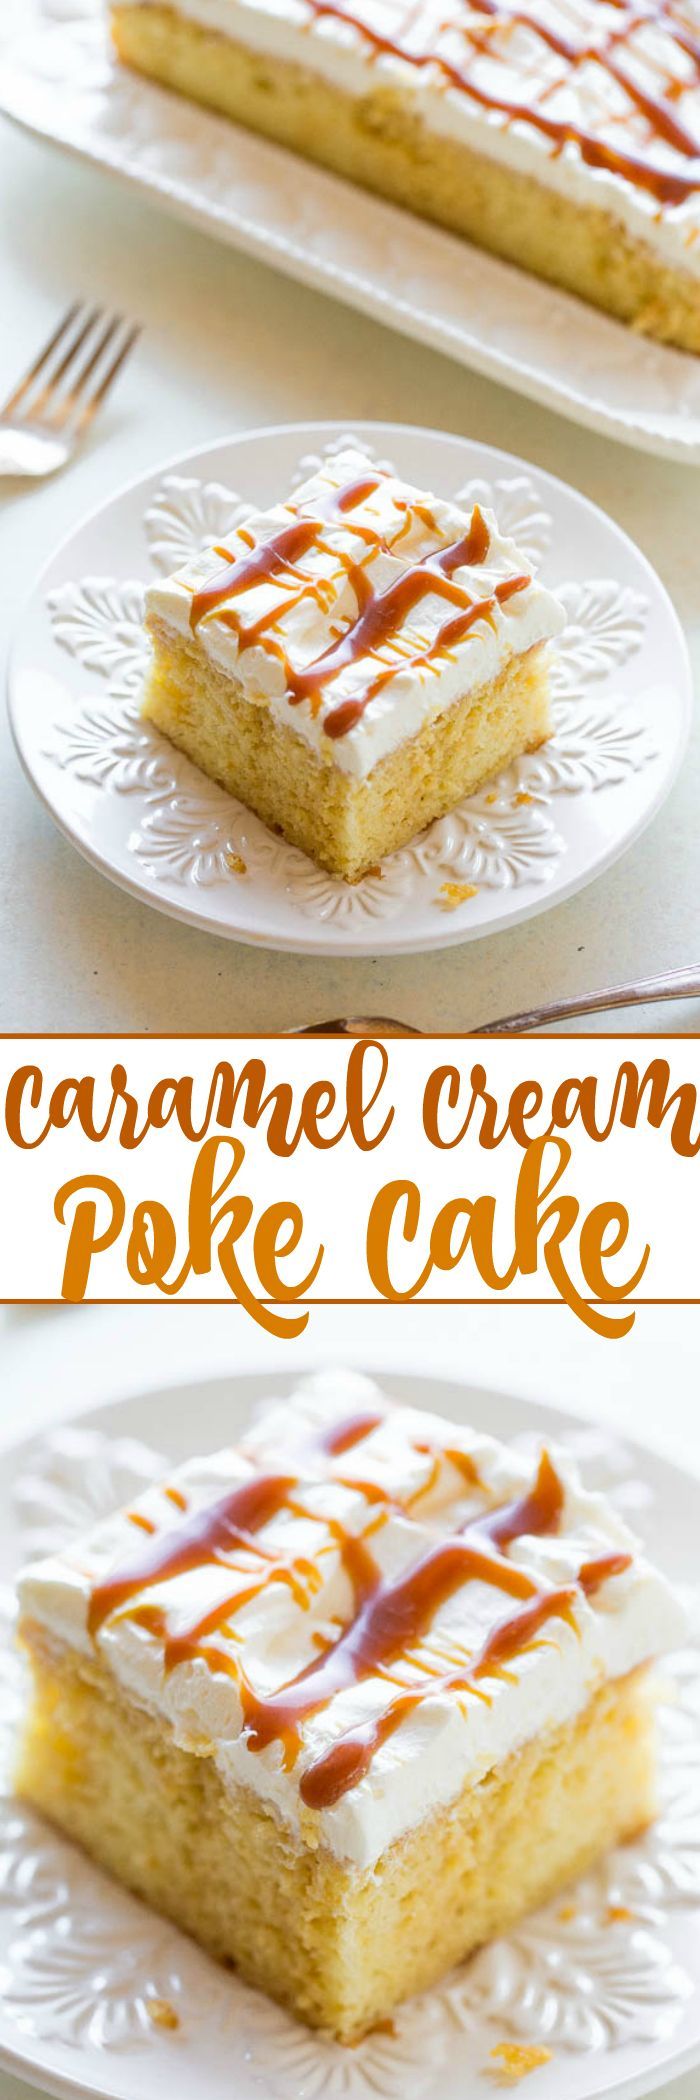 Caramel Cream Poke Cake A Creamy Caramel Mixture Soaks Into Soft Yellow Cake Before Being